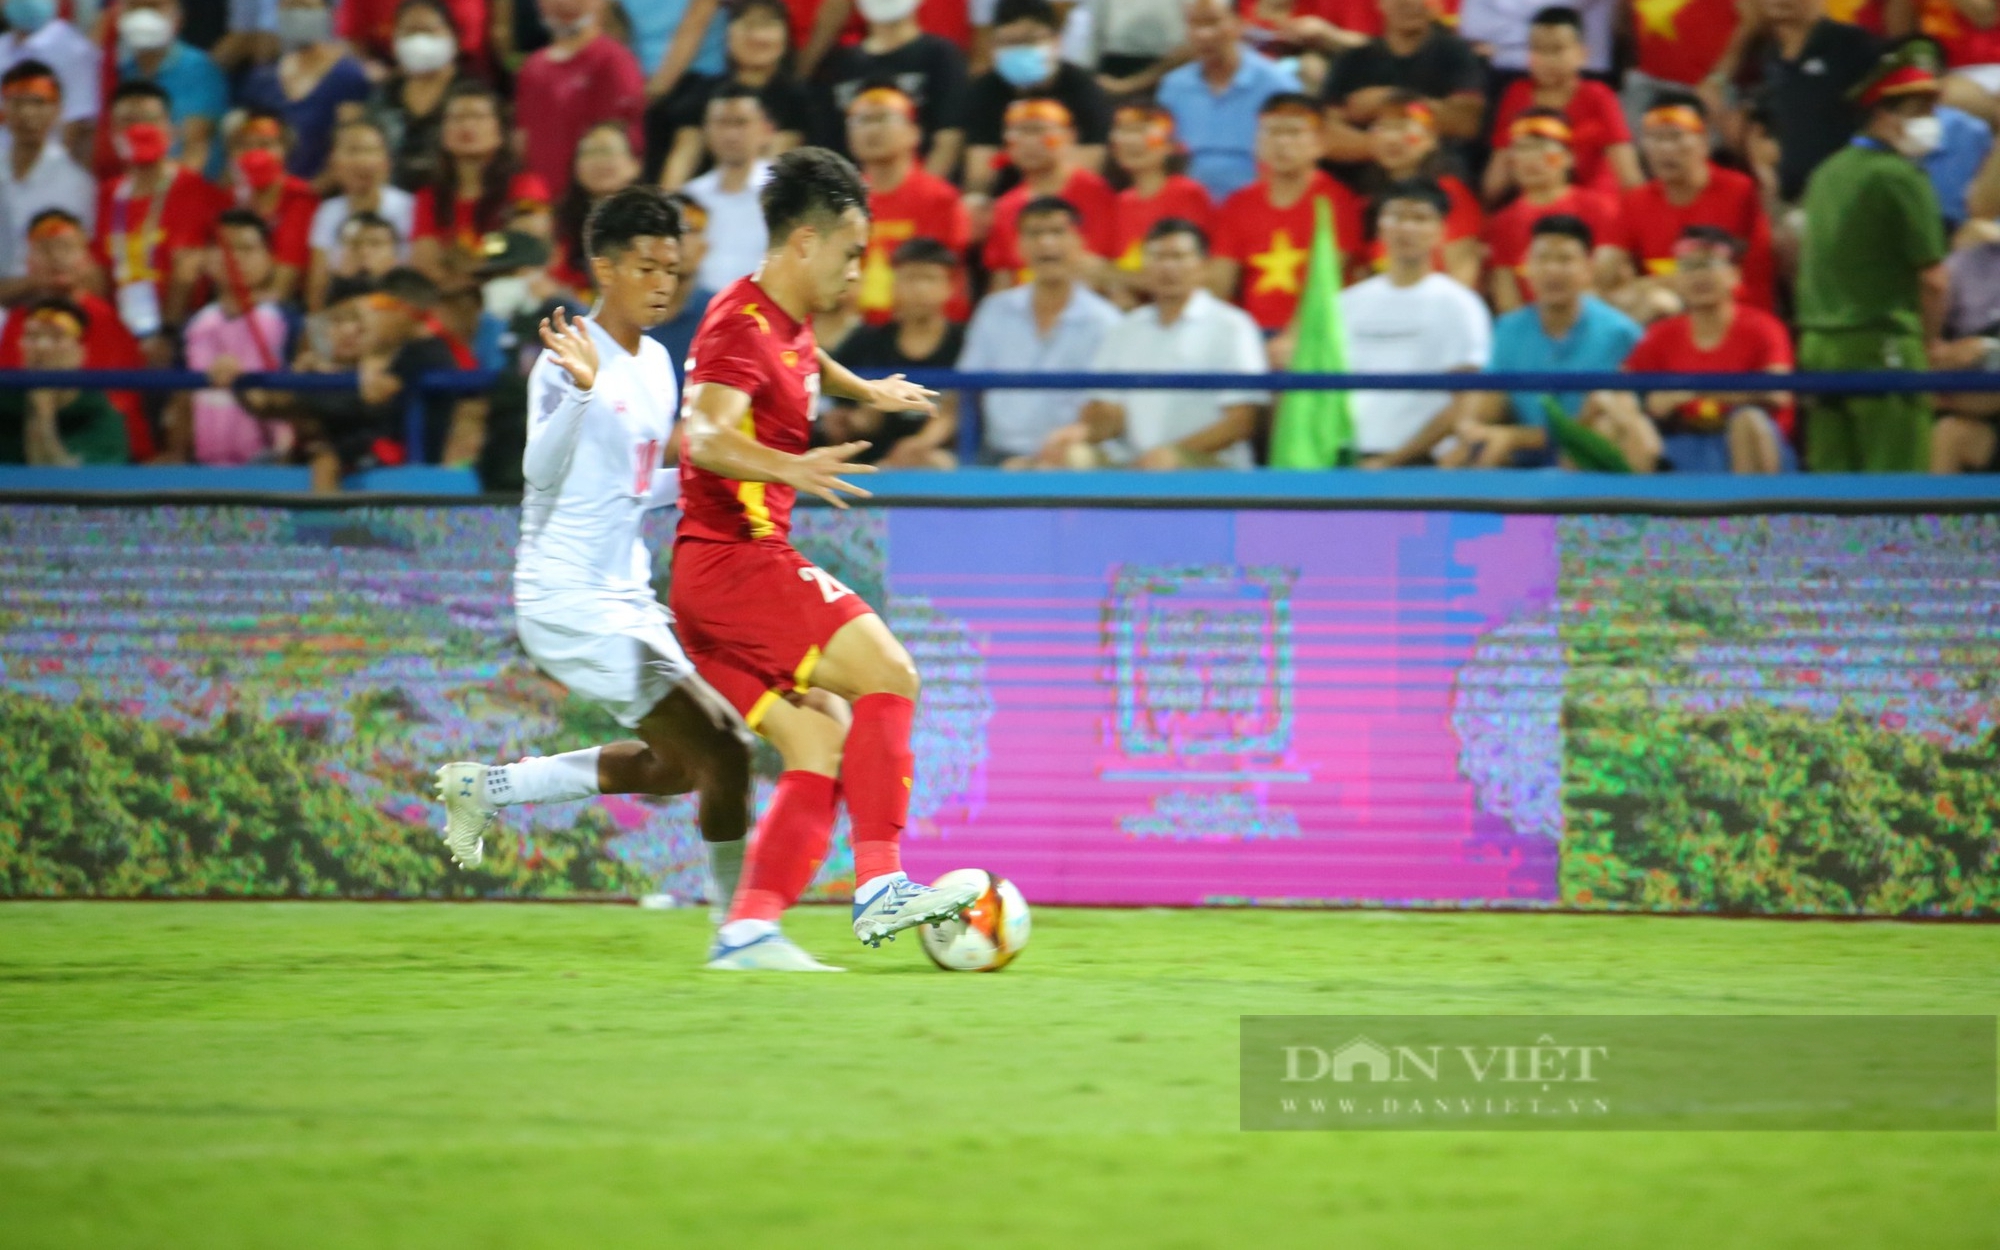 Myanmar fans admire the bravery of U23 Vietnam